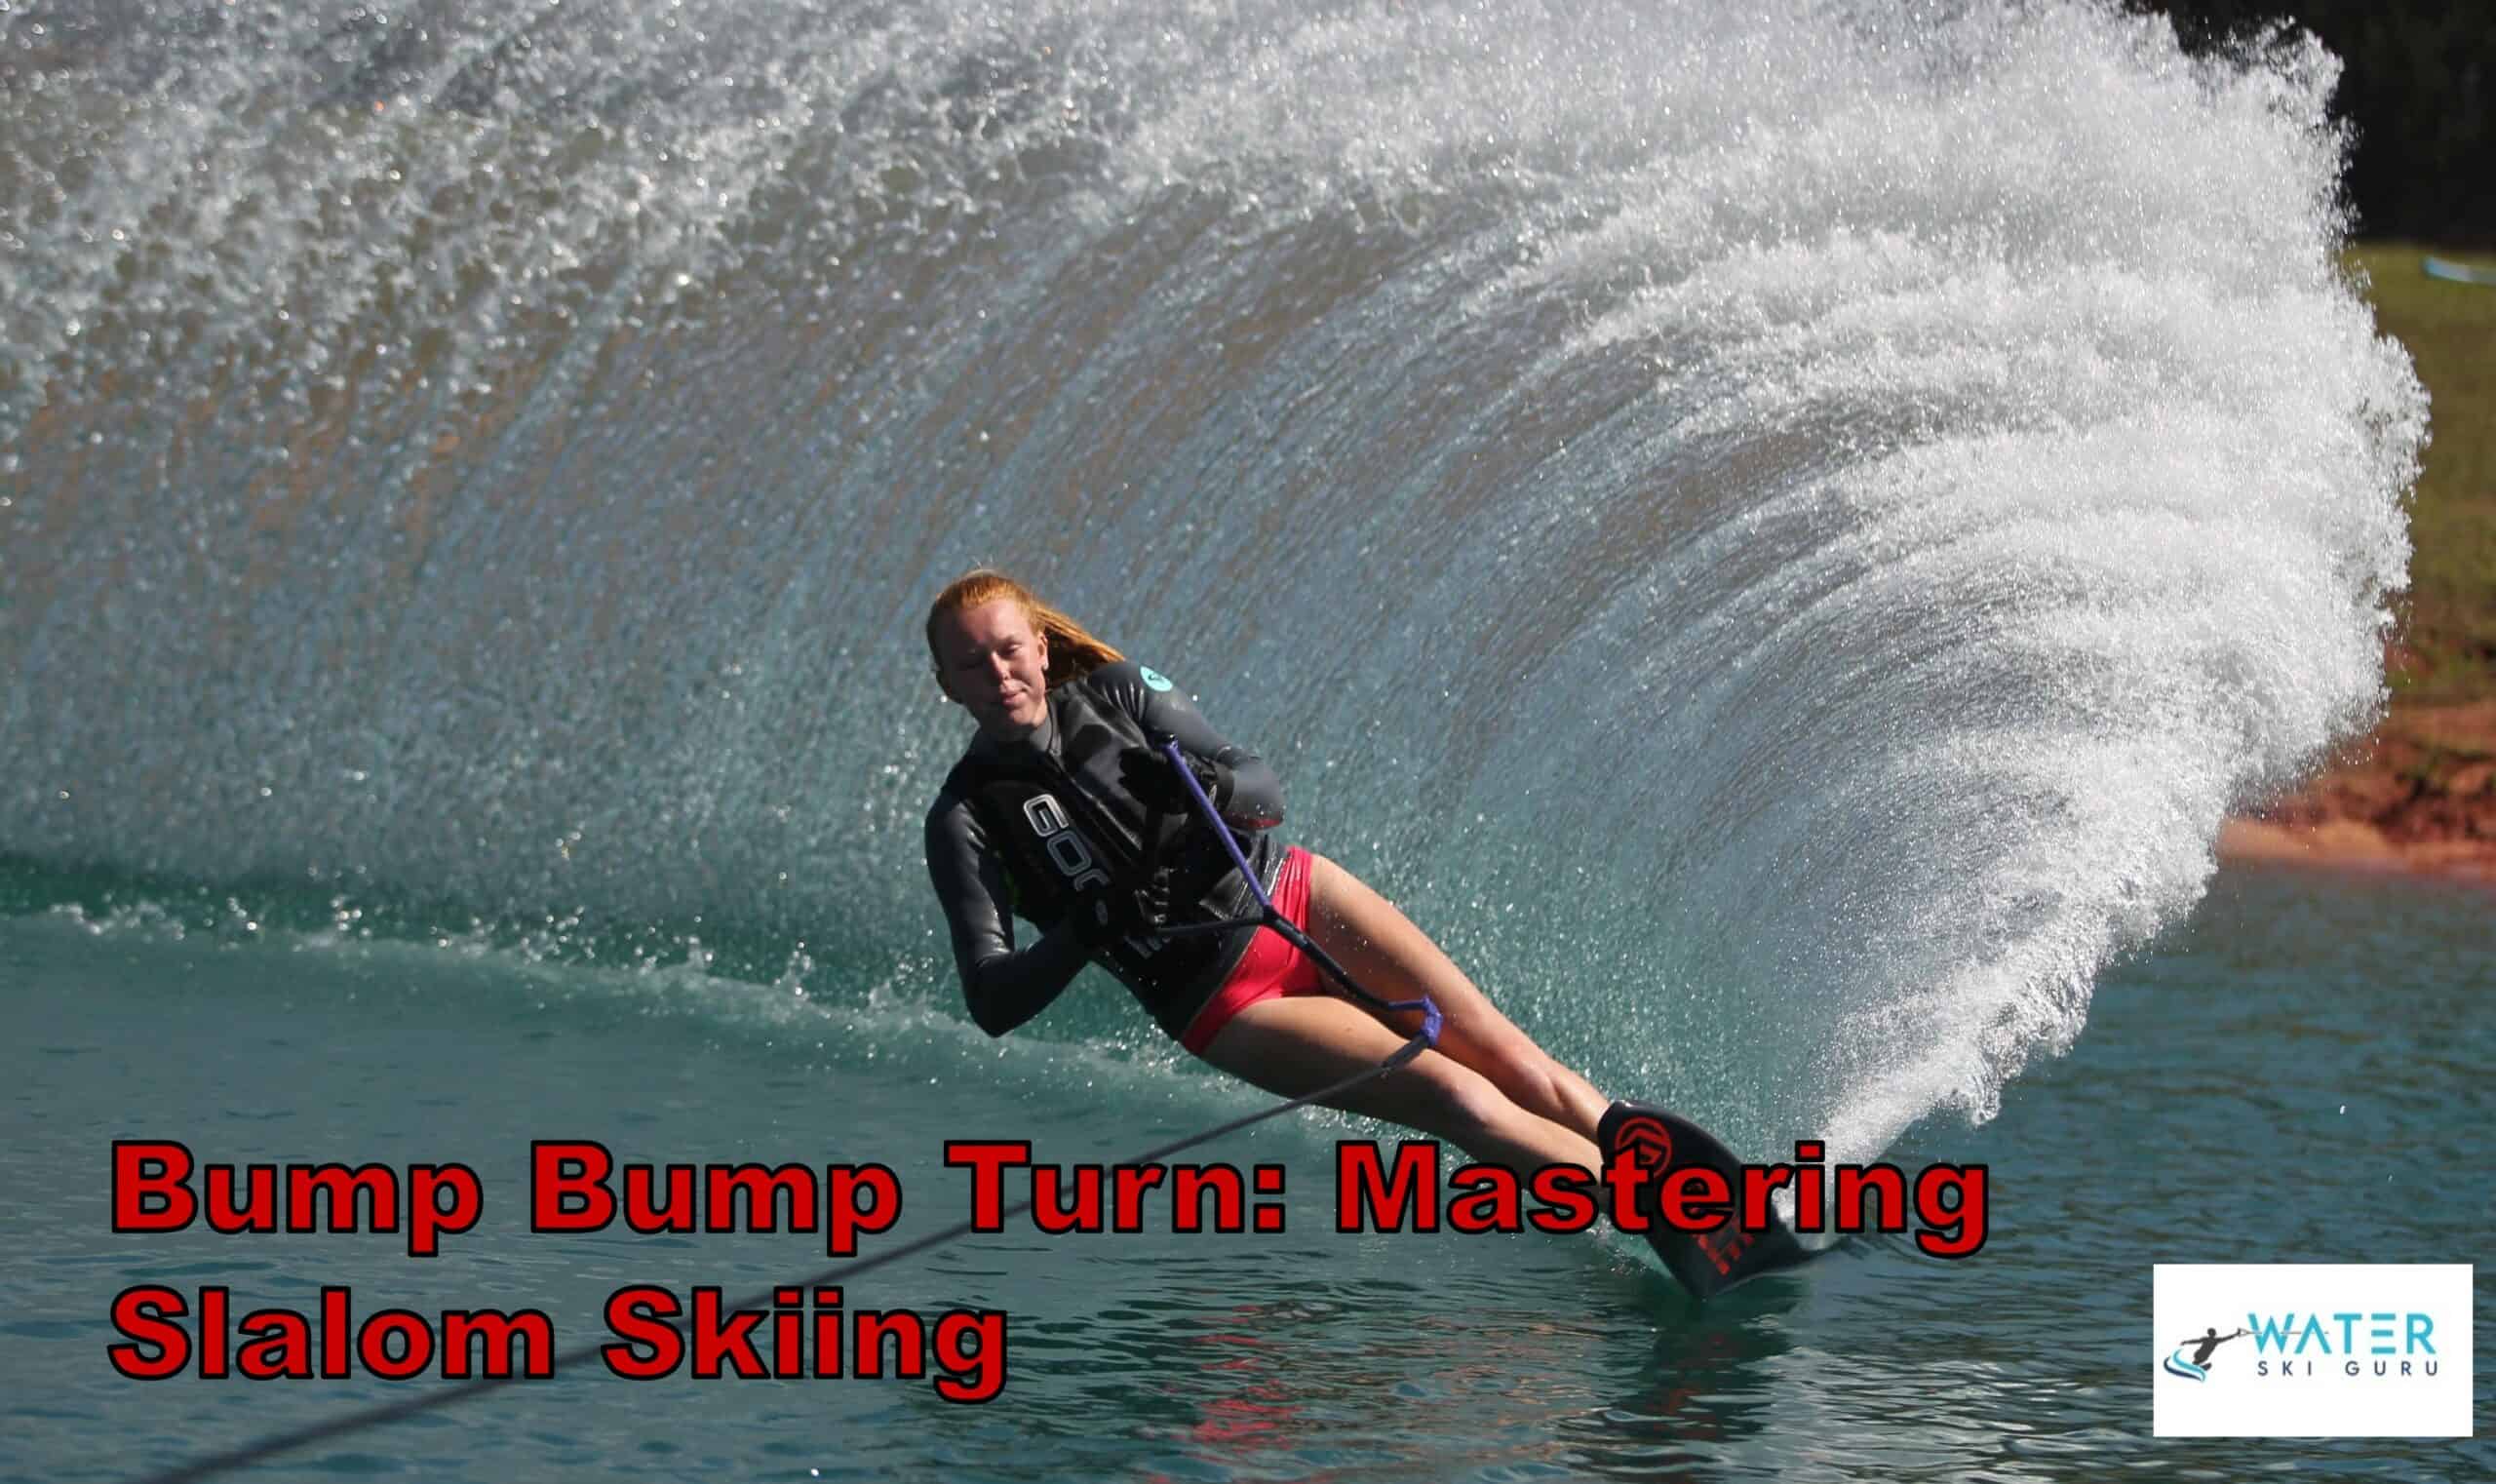 Bump Bump Turn Mastering Slalom Skiing